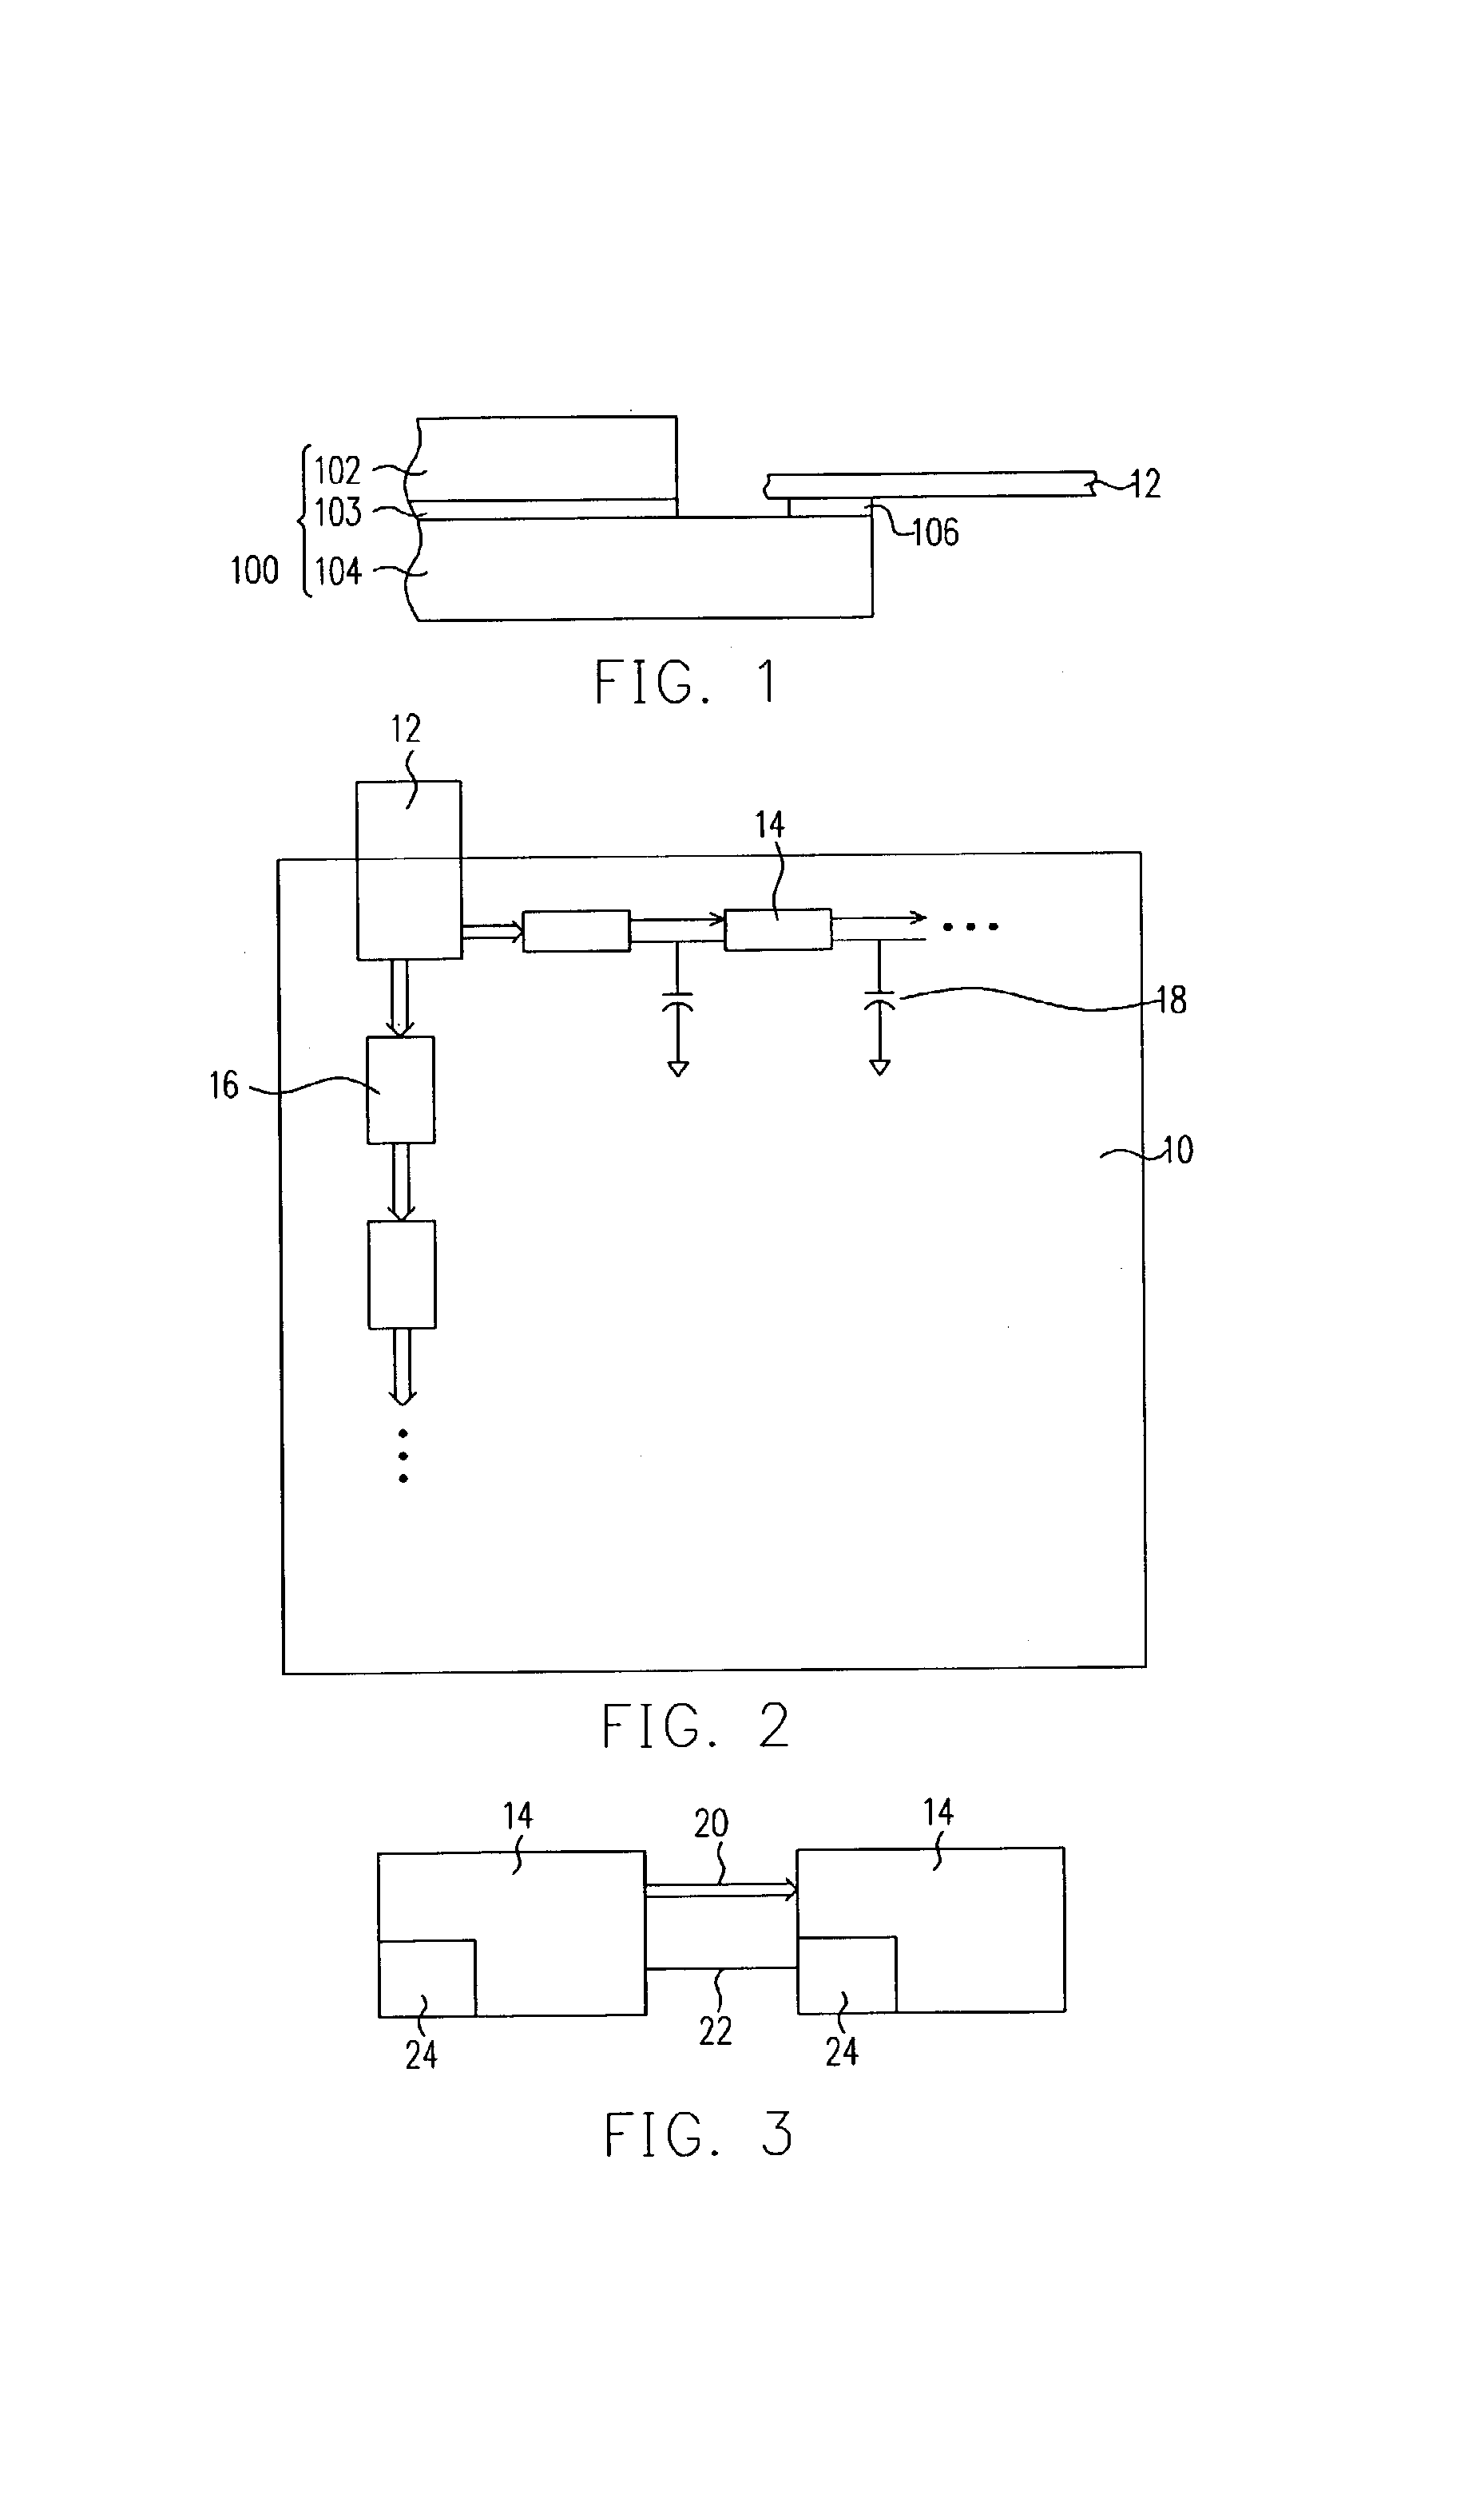 Drive circuit of TFTLCD